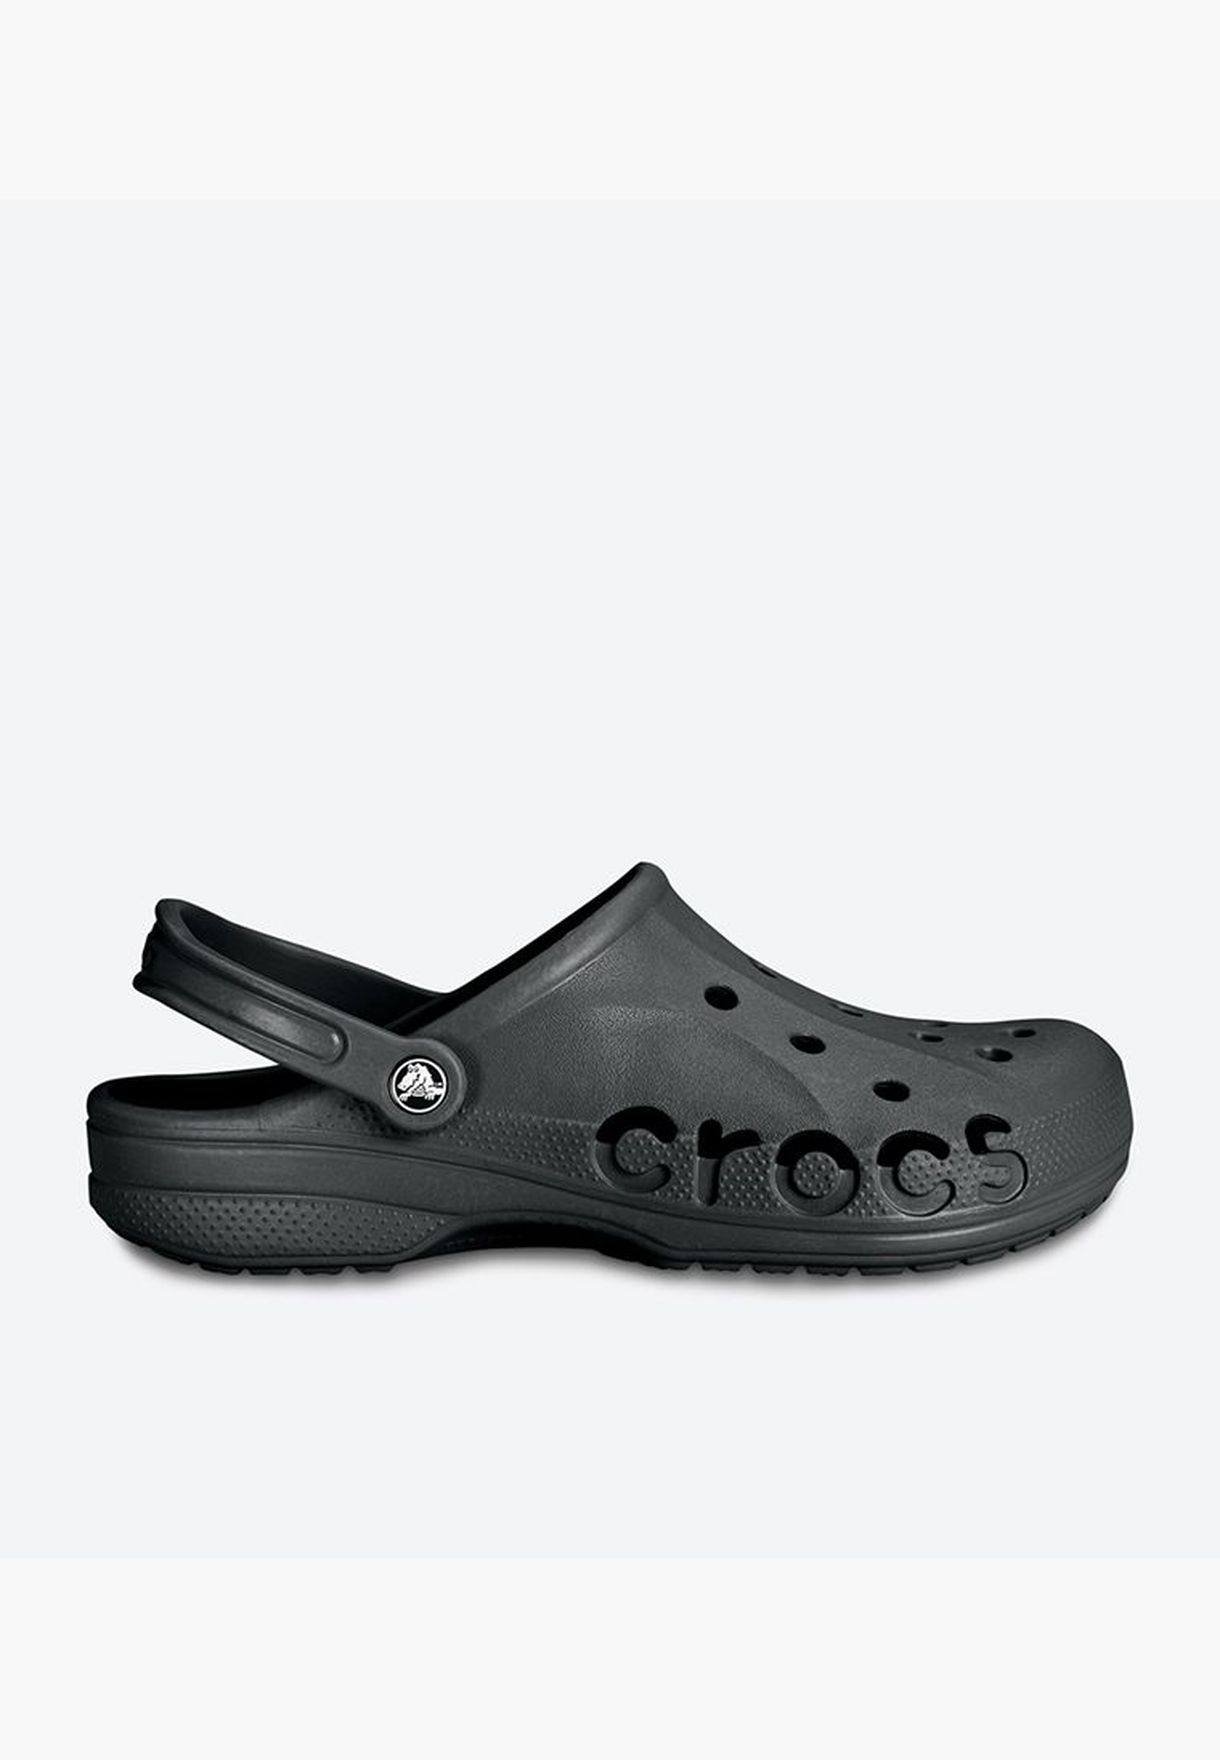 buy crocs